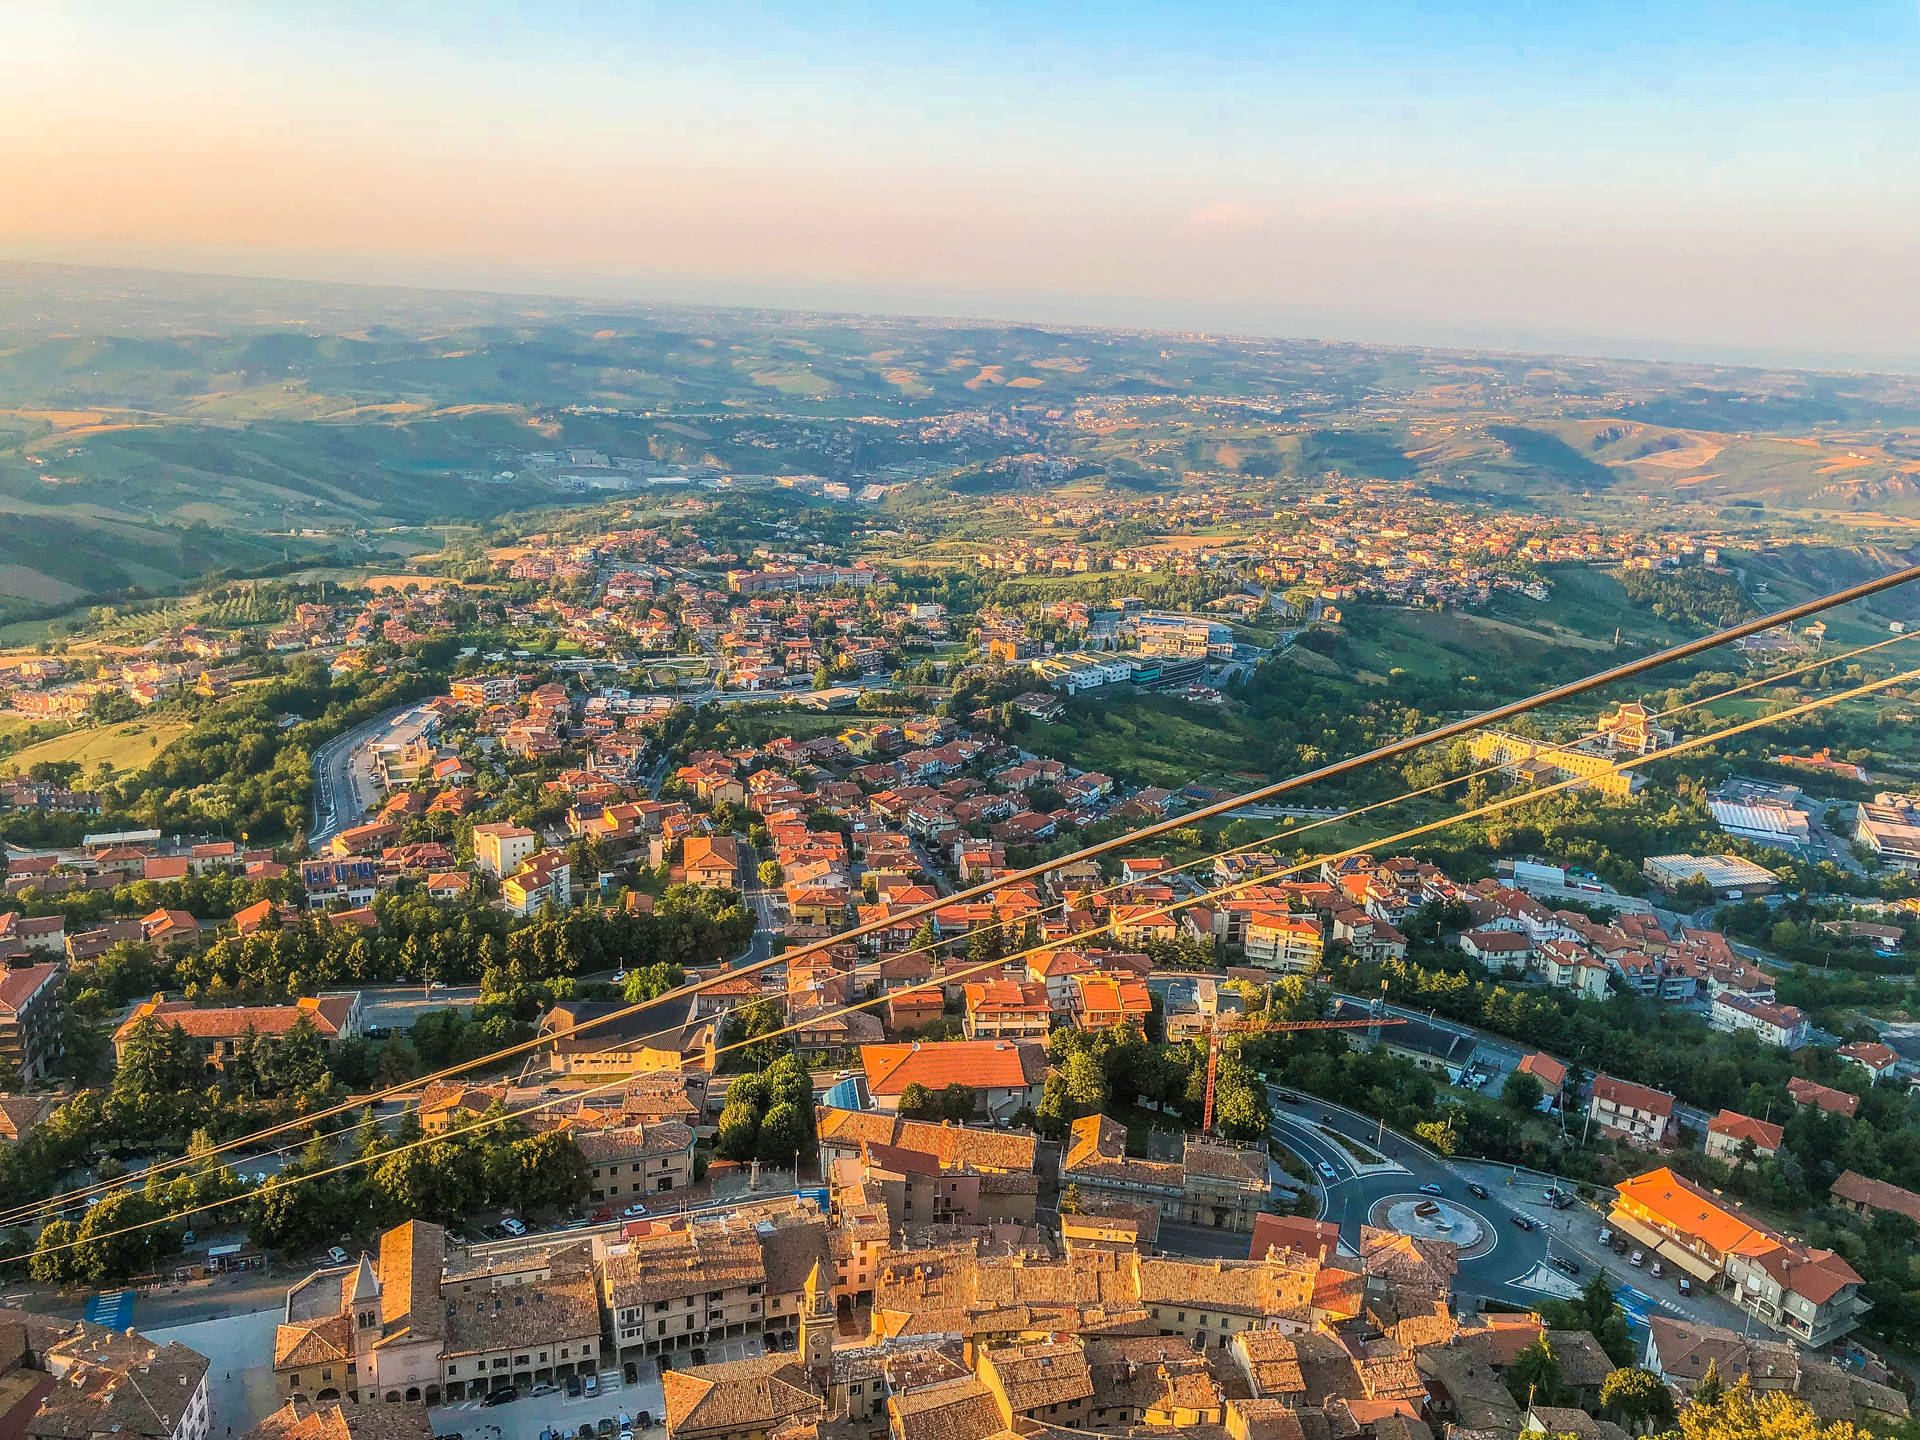 San Marino Forlì Cesena Aerial View Background